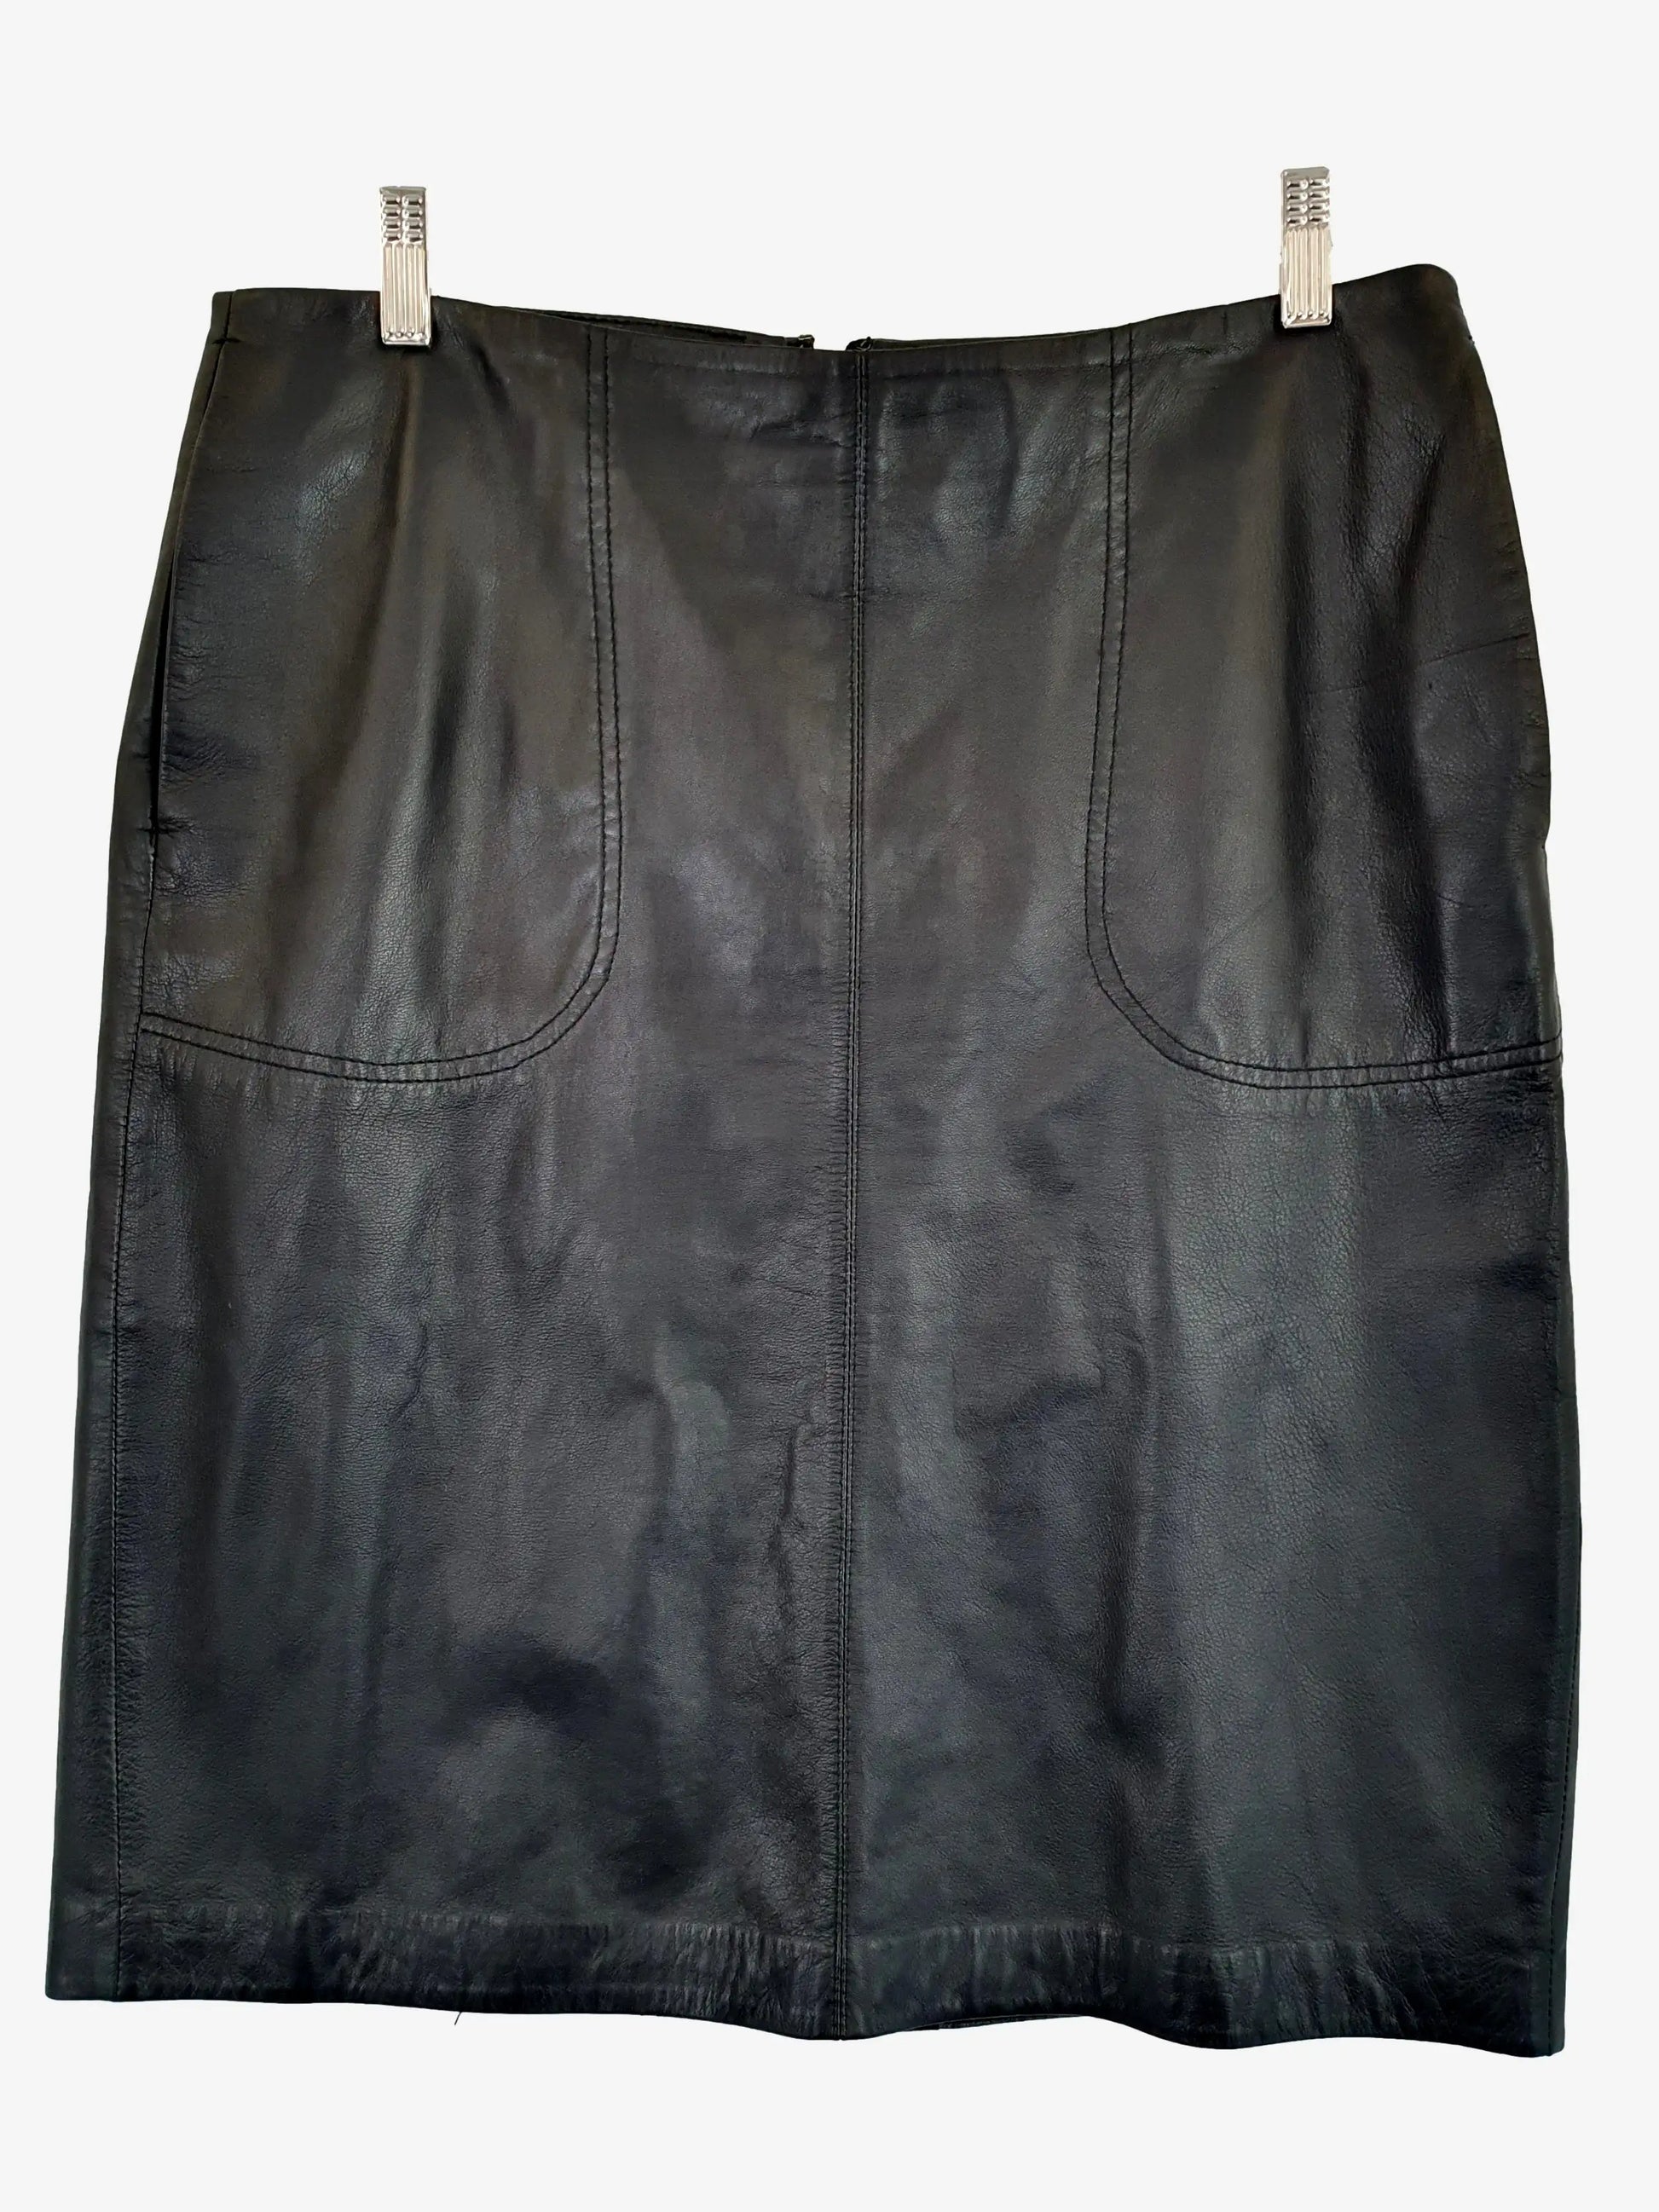 Sportscraft Elegant A-line Mini Skirt Size 12 by SwapUp-Online Second Hand Store-Online Thrift Store